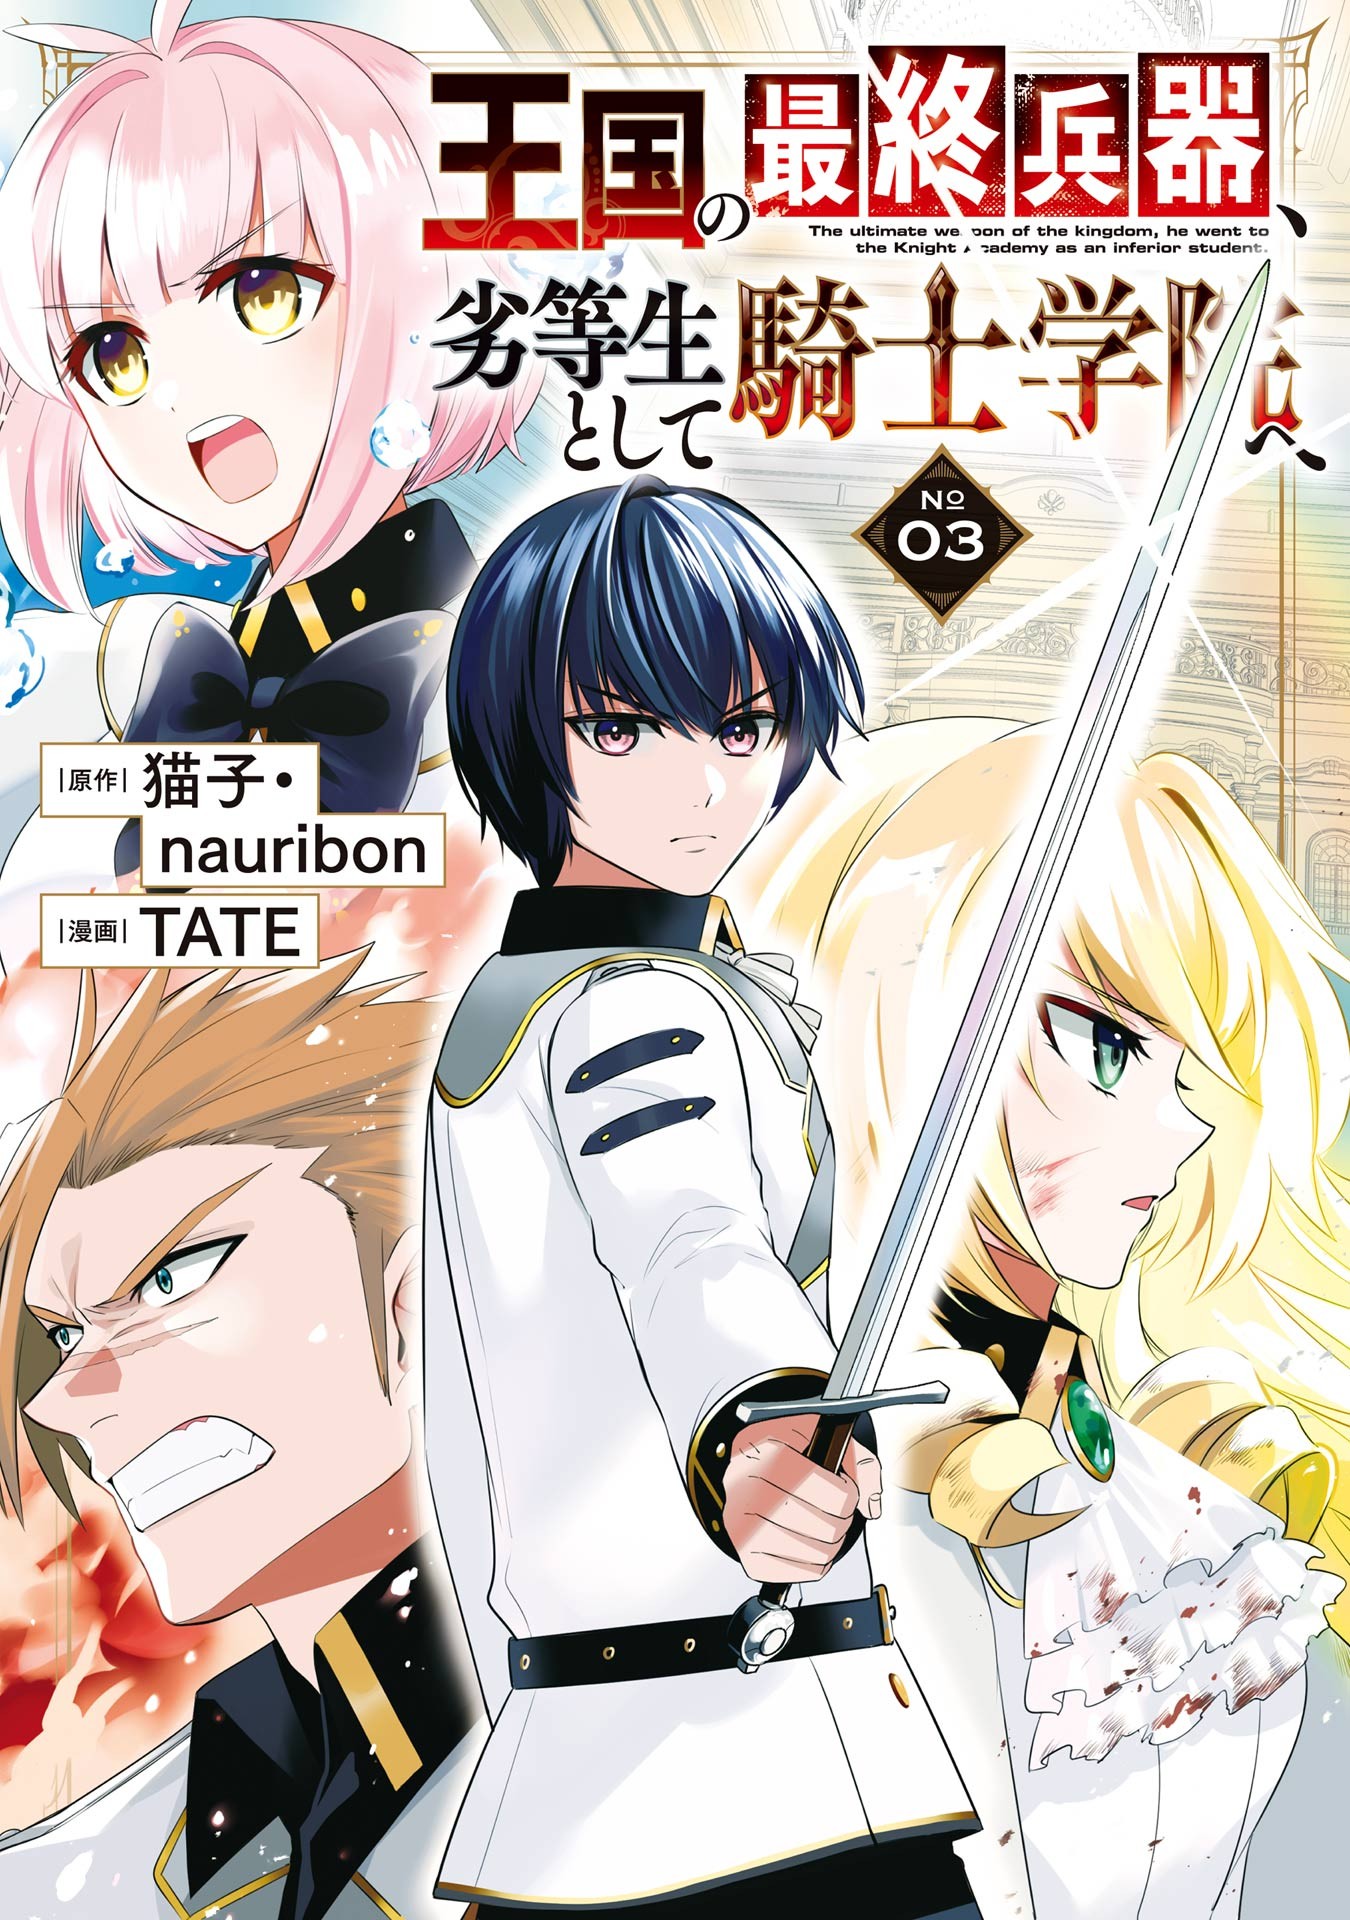 BOOK☆WALKER Global:The Kingdoms of Ruin Vol. 3 (Hametsu no Oukoku) - Manga  - BOOK☆WALKER【2023】